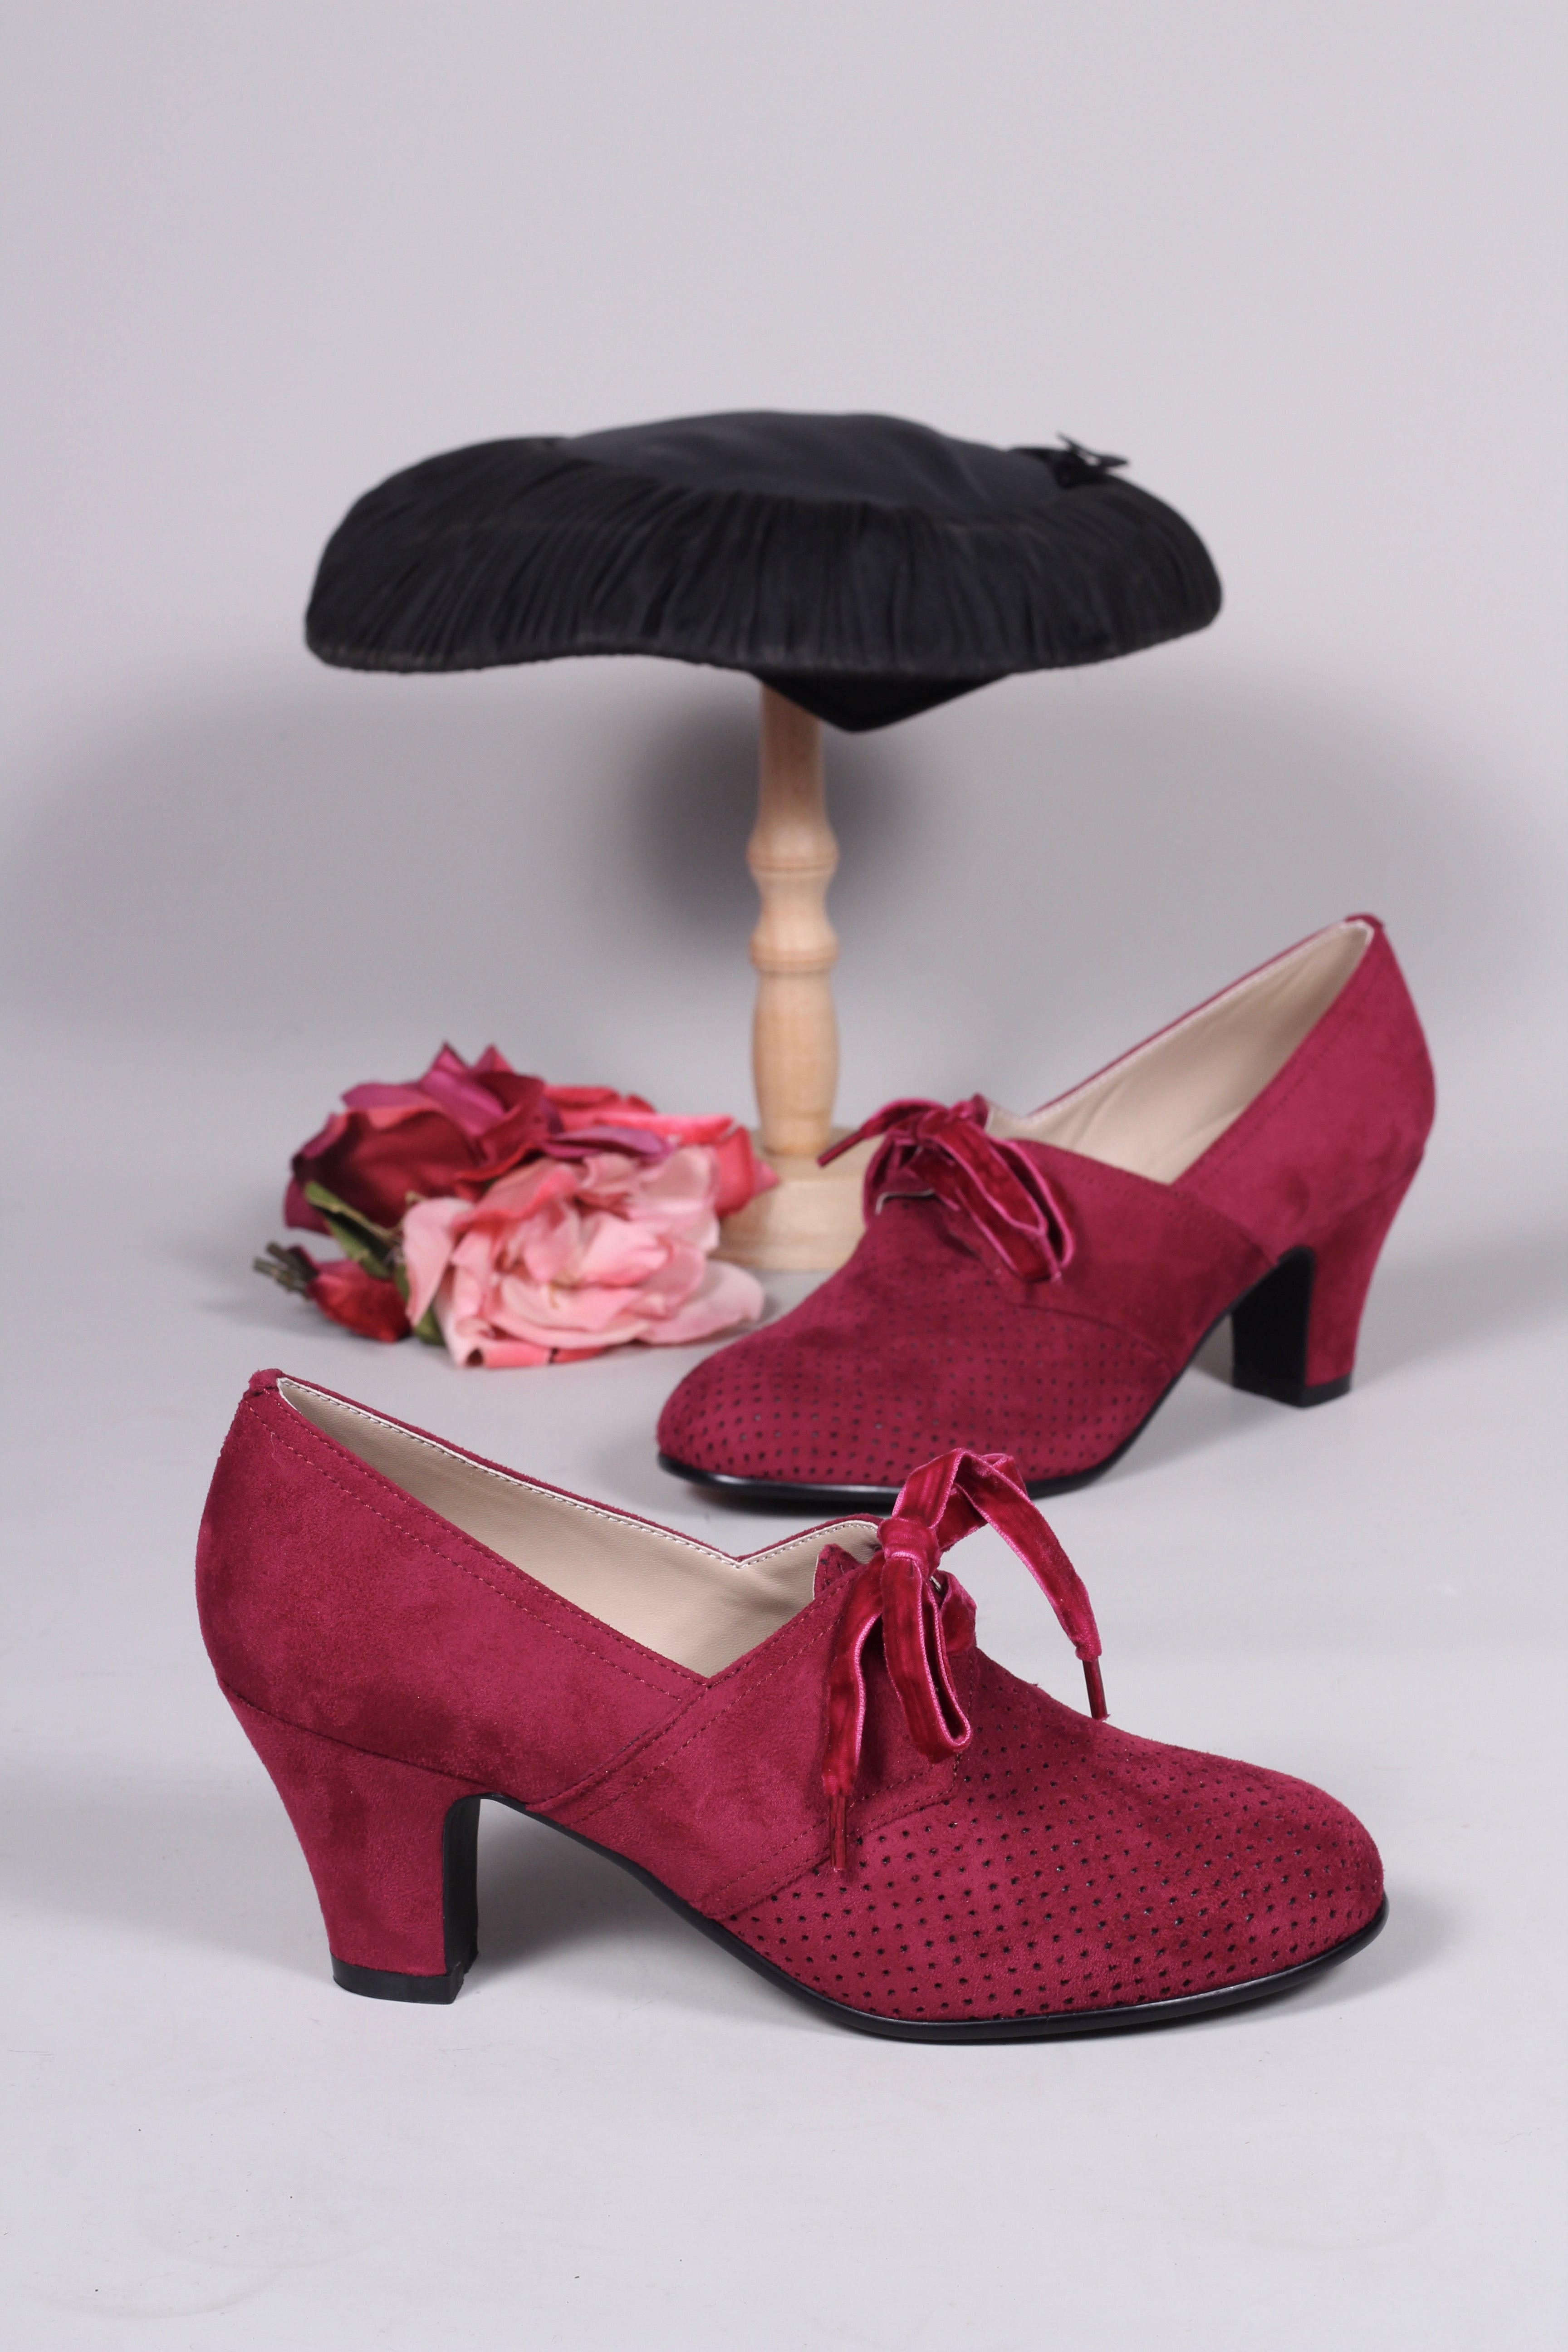 Banned Back to Business Mary Jane Vintage Retro Heels (4) Black Tan:  Amazon.co.uk: Fashion